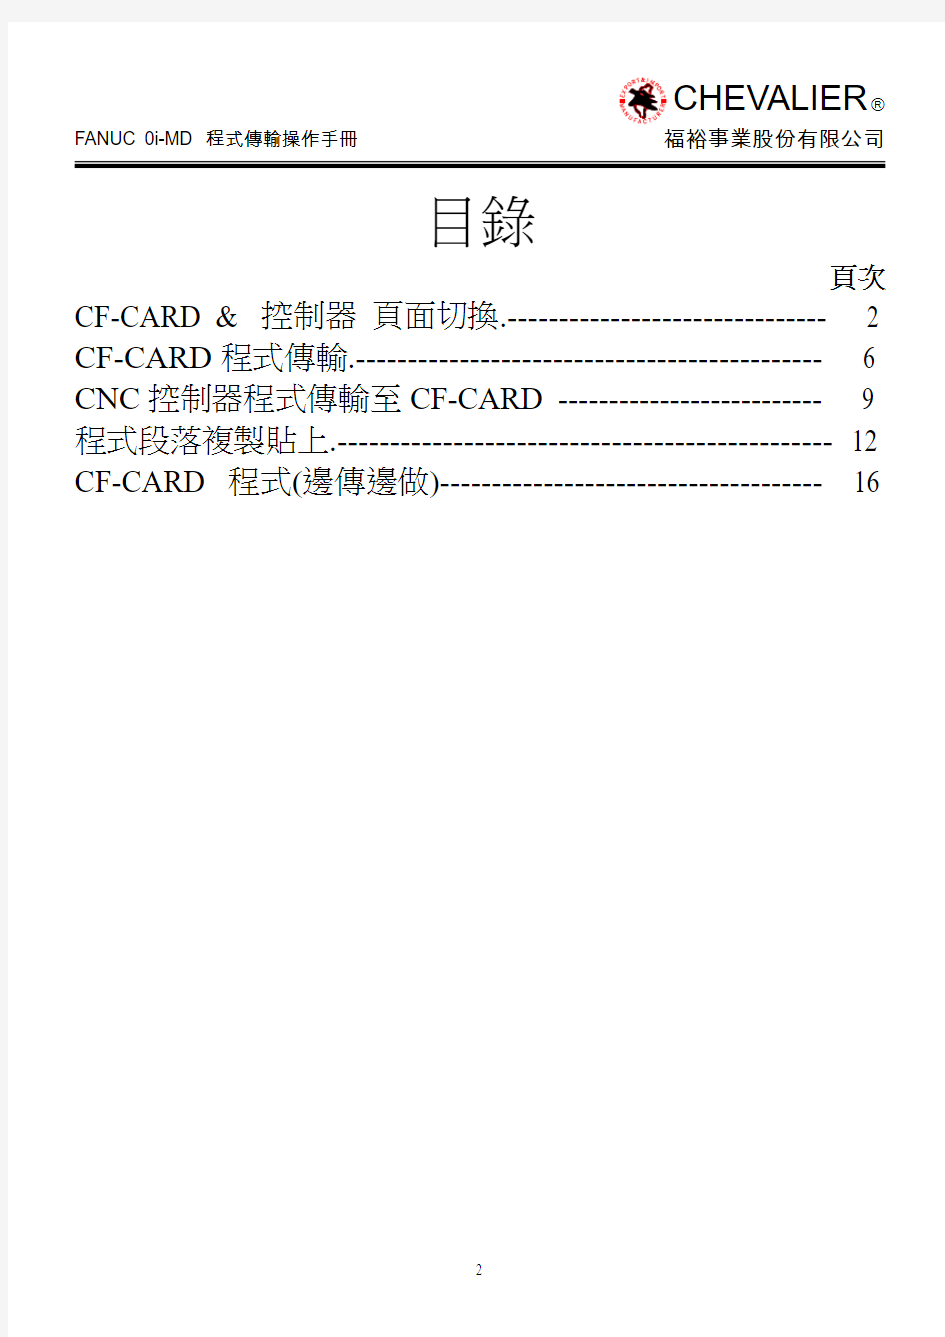 FANUC 0i-MD 程式传输操作手册